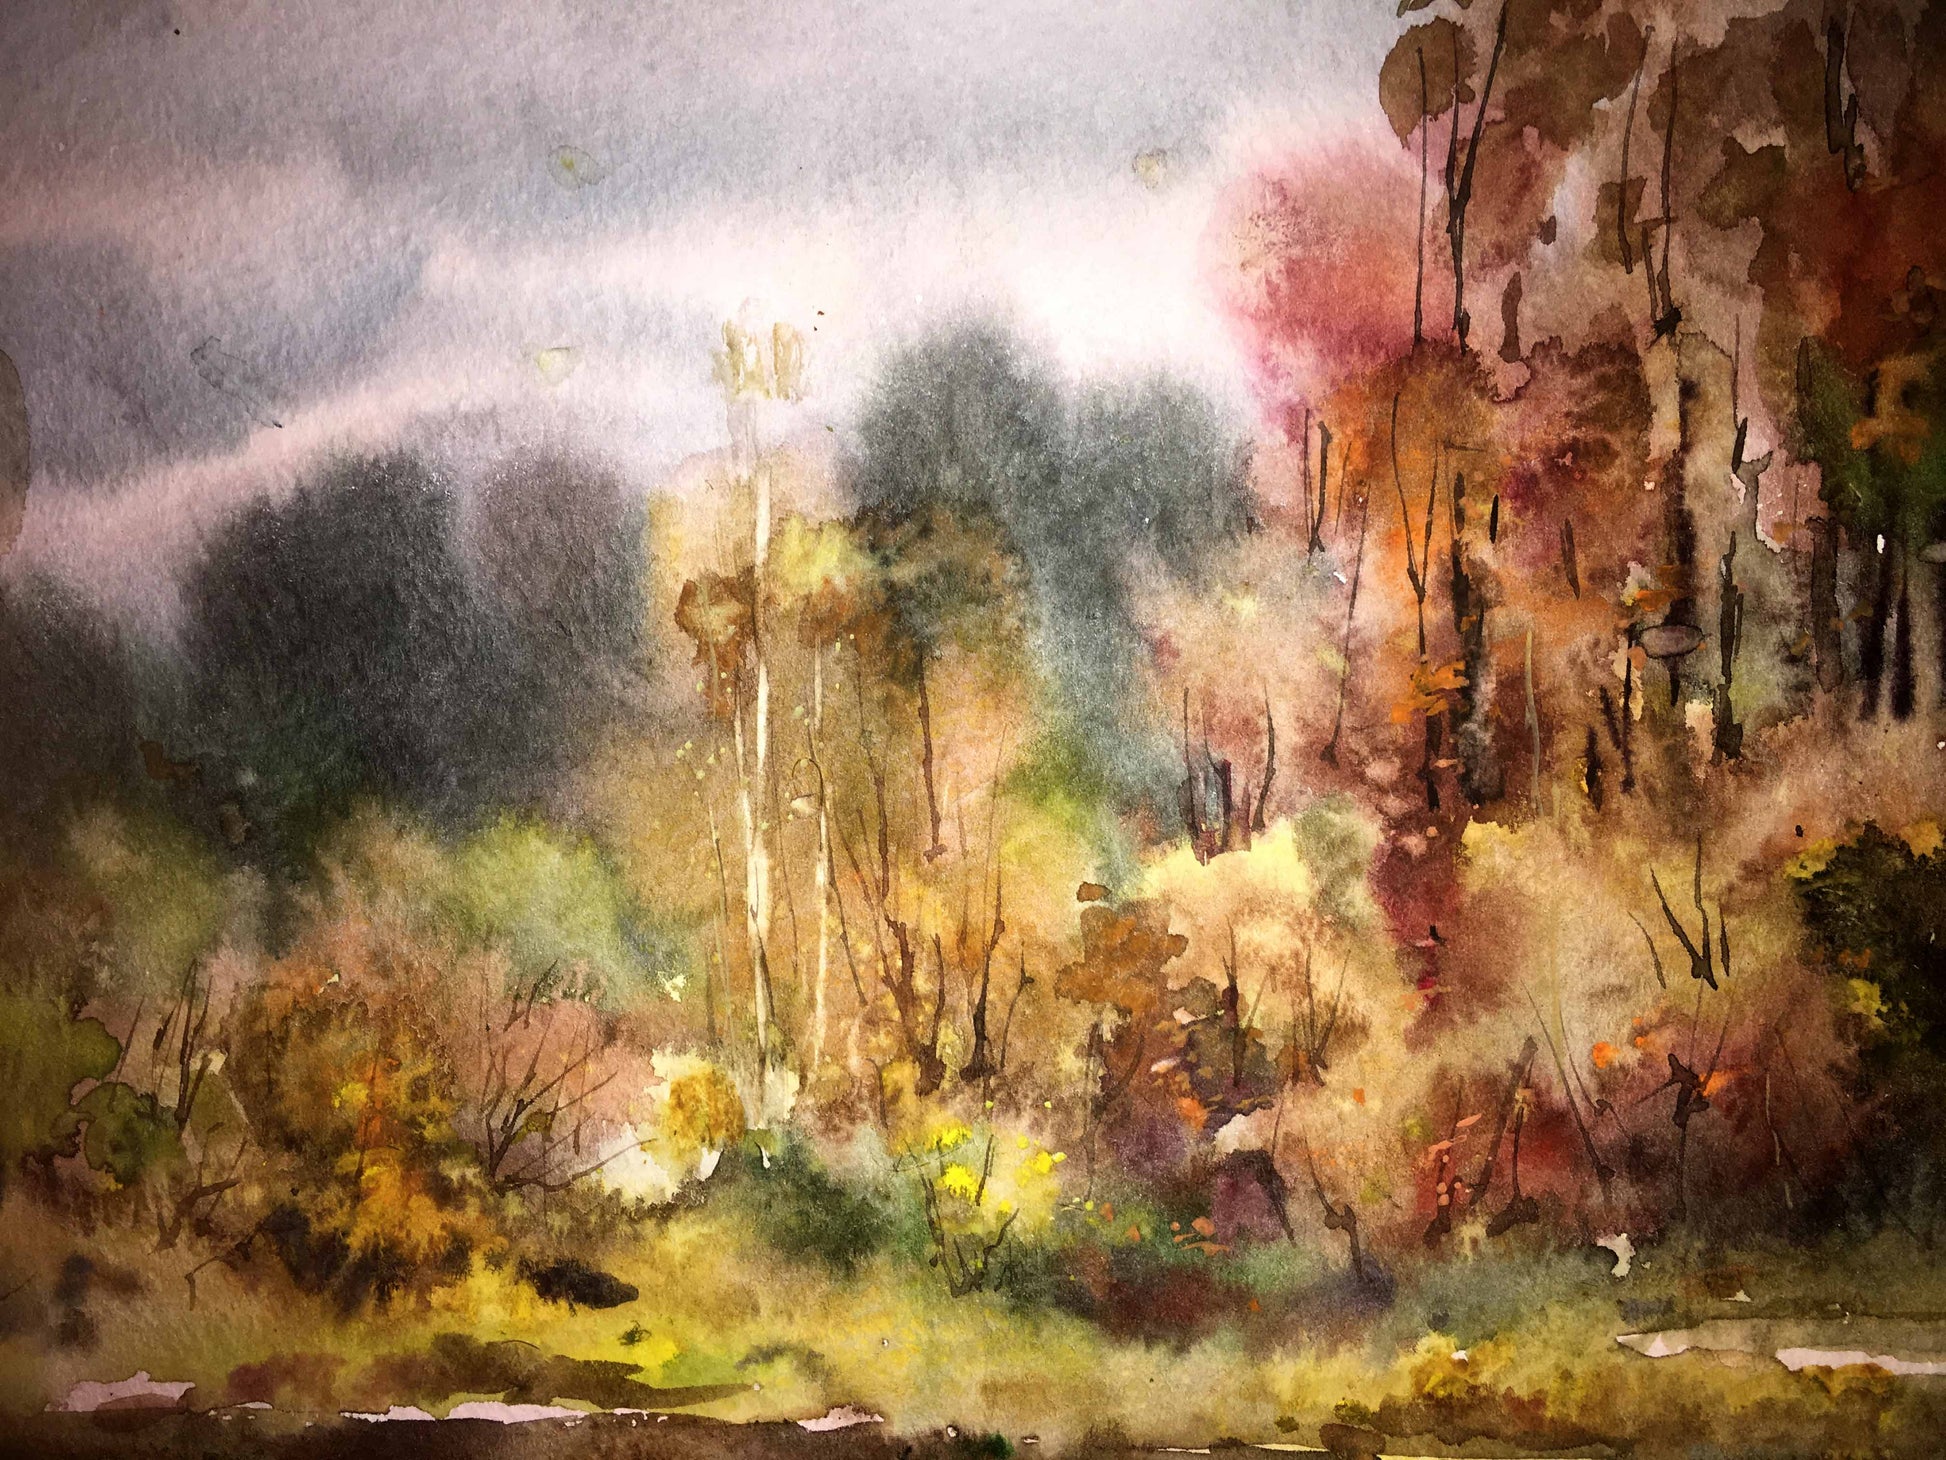 Autumn Gold, a watercolor piece by Viktor Mikhailichenko